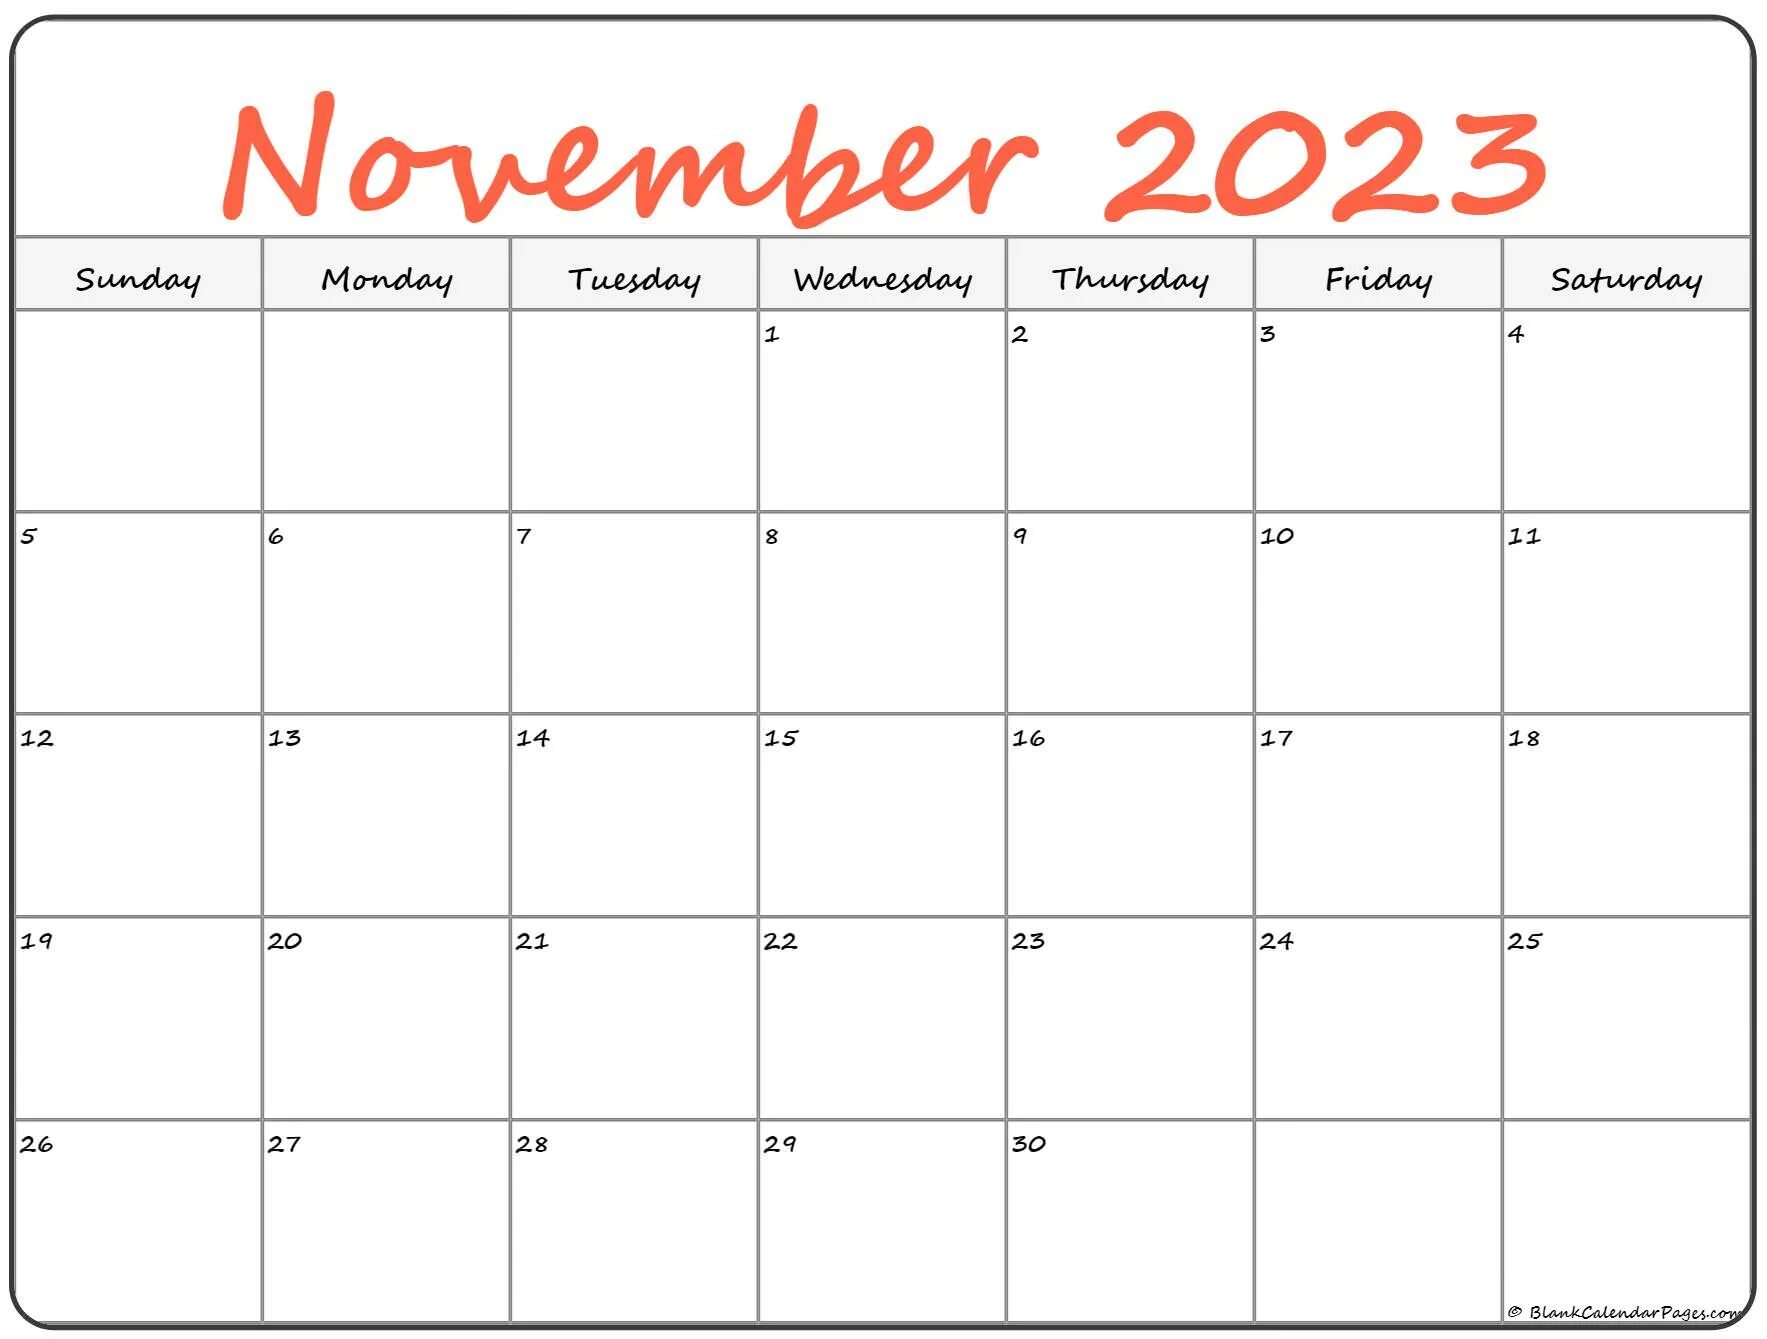 Сборник март 2023. March 2022. Календарь декабрь 2022. Календарь ноябрь 2022. Календарь на март 2022 года.